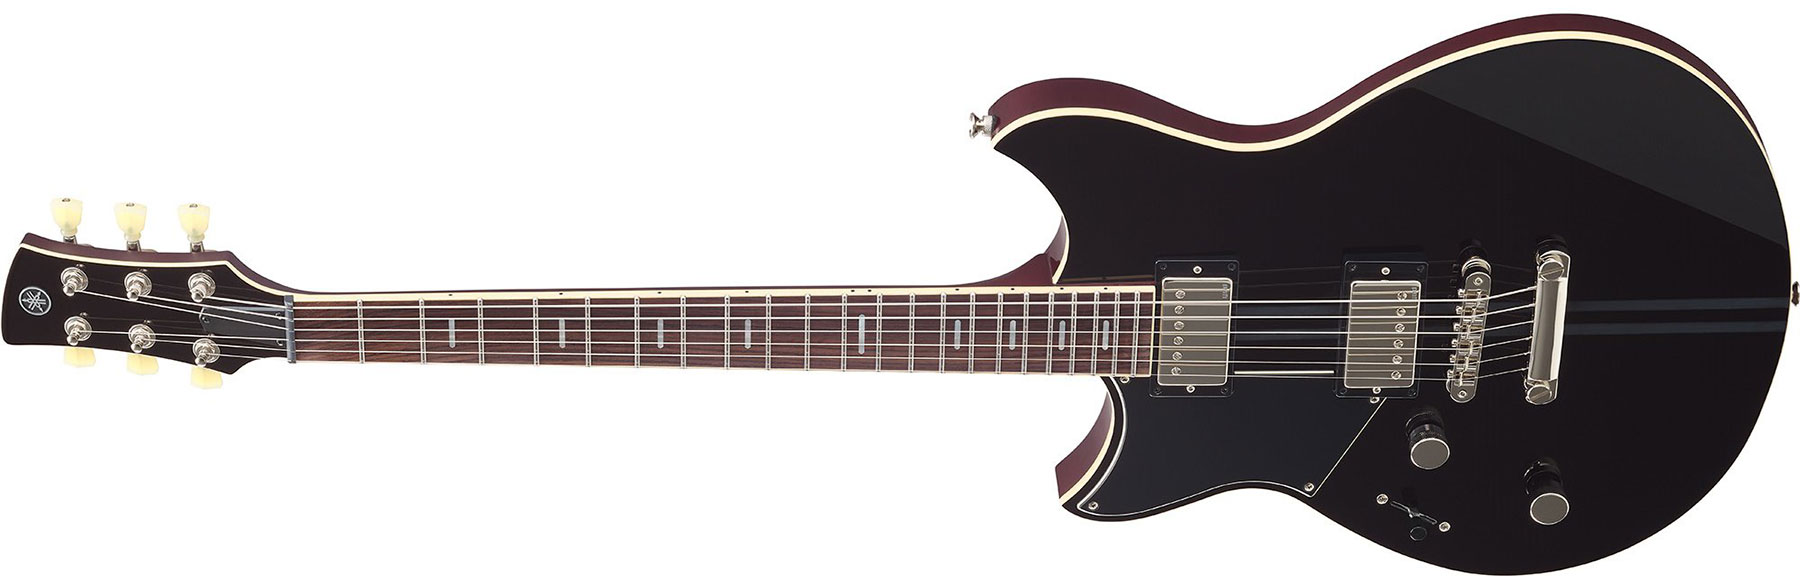 Yamaha Rss20l Revstar Standard Lh Gaucher Hh Ht Rw - Black - Linkshandige elektrische gitaar - Variation 1